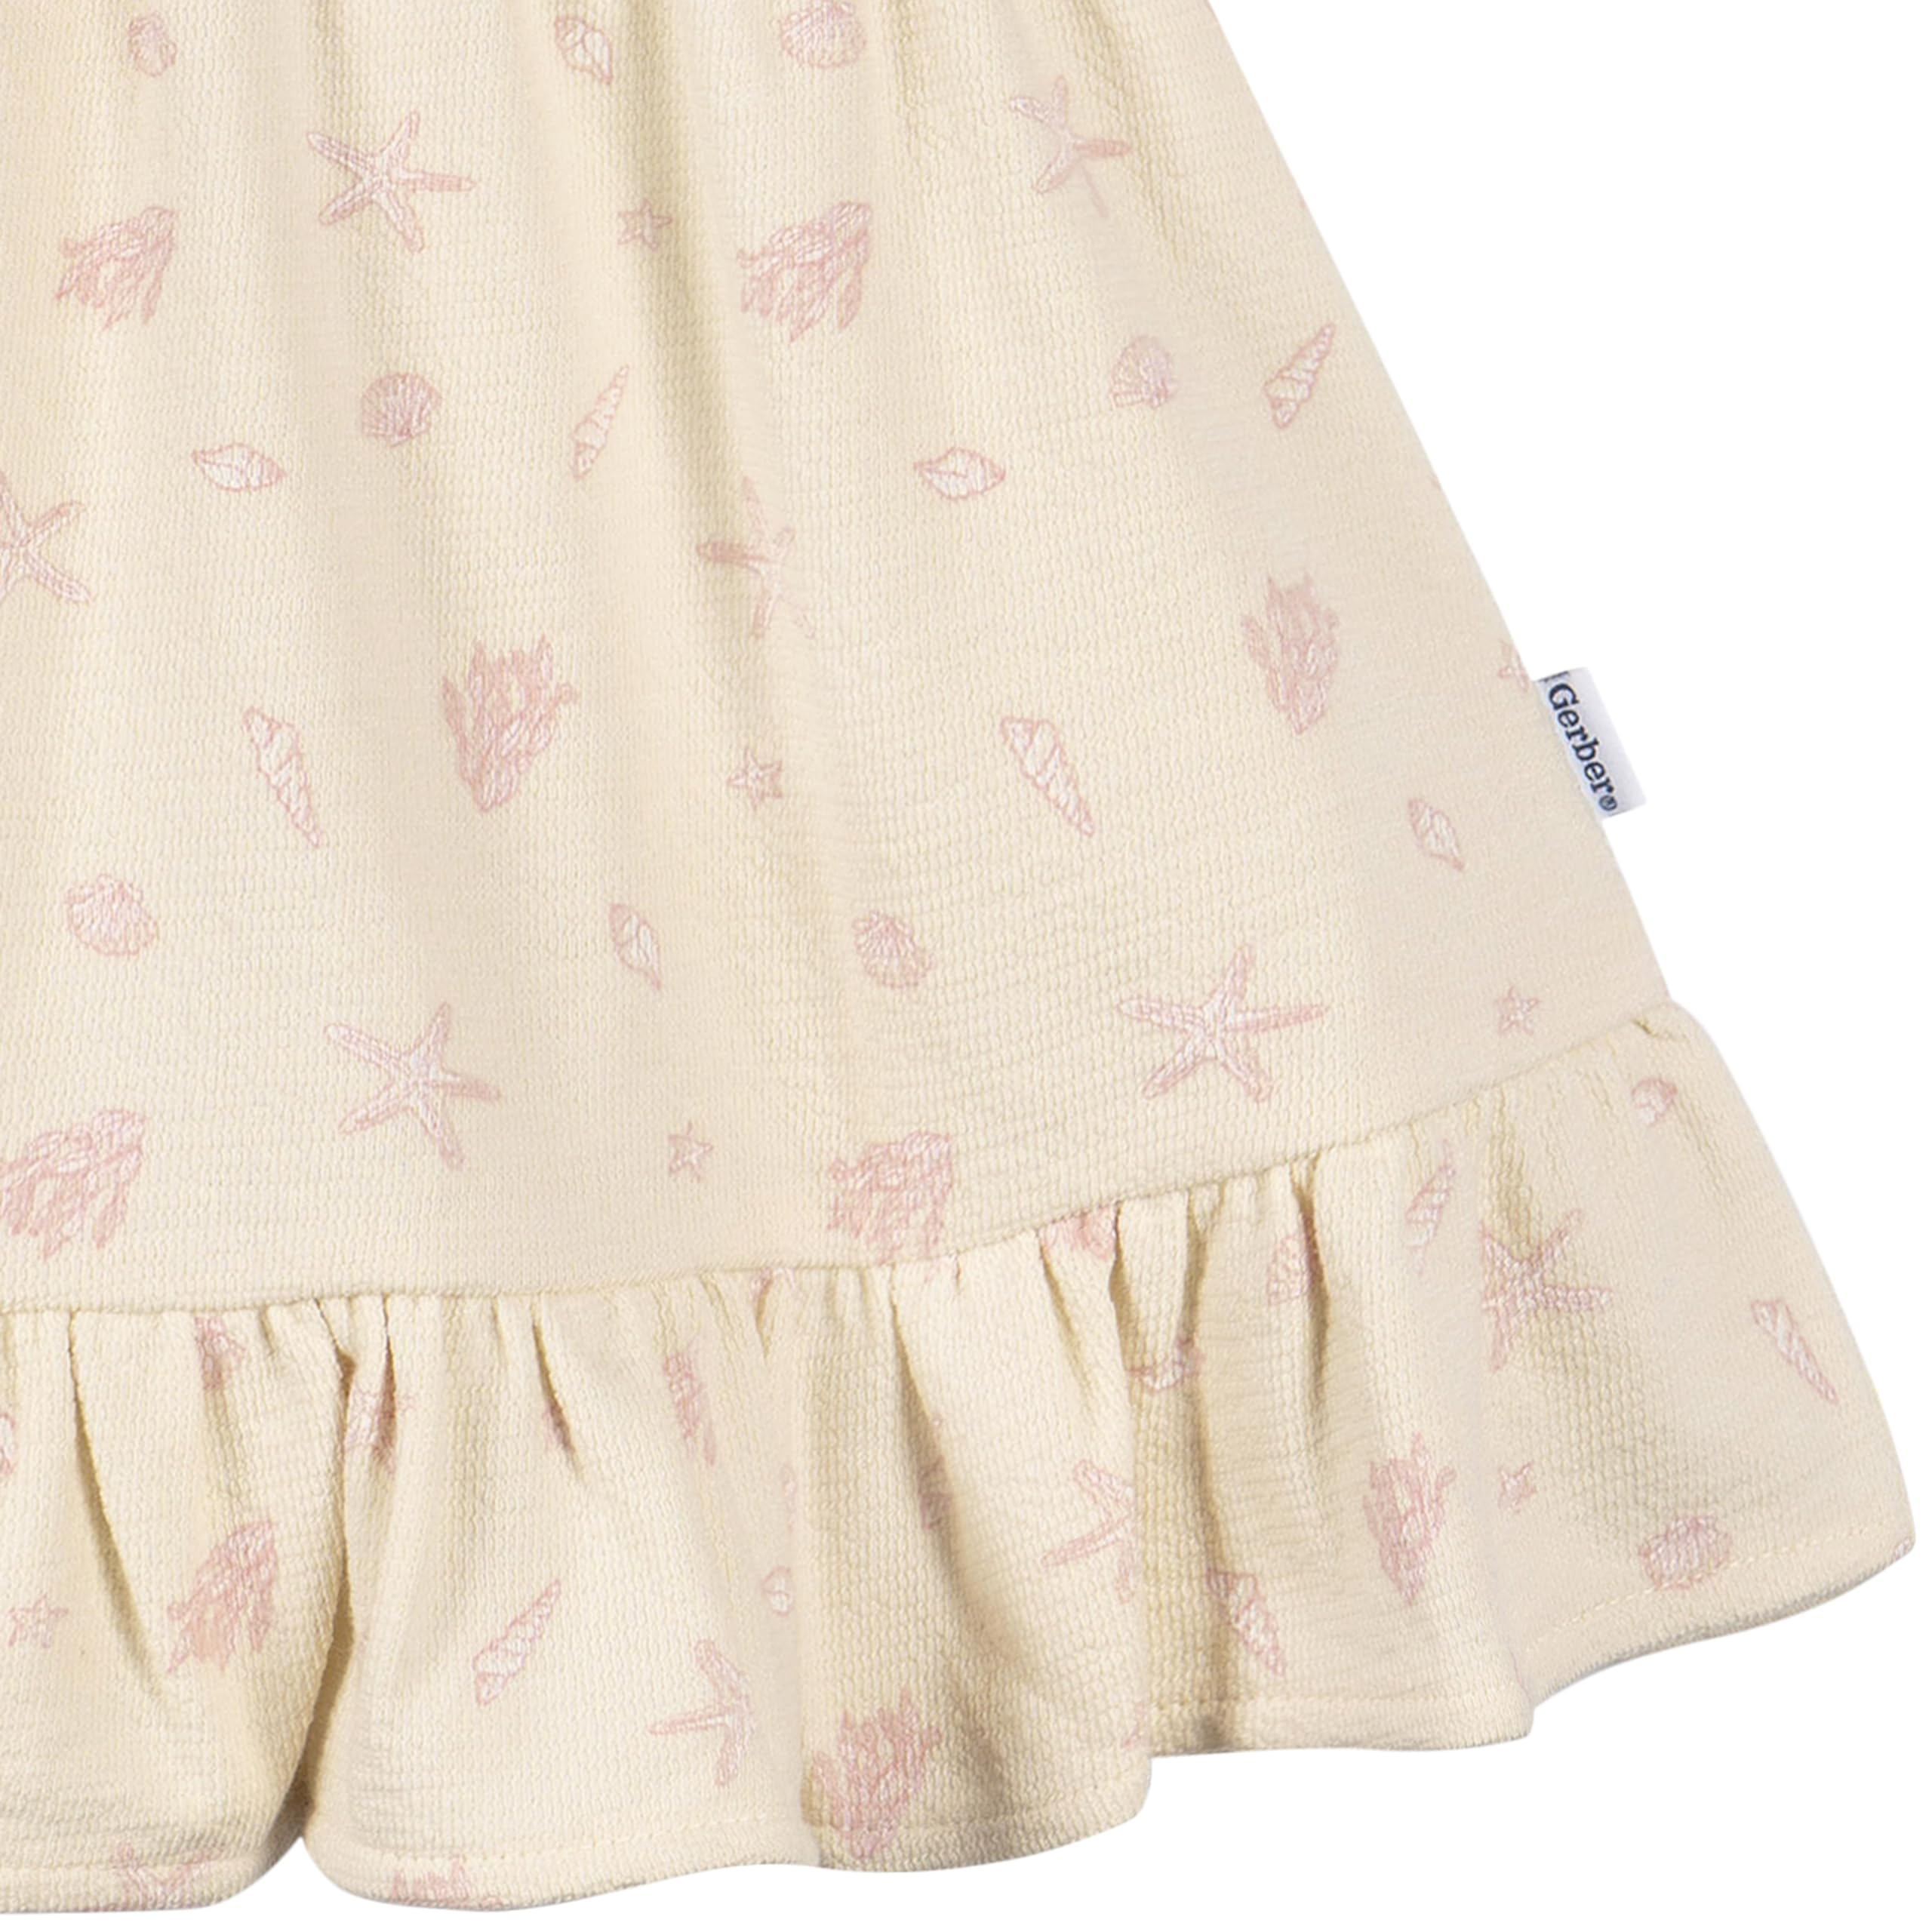 Gerber Girls' Toddler Short-Sleeve Dress, Seashells